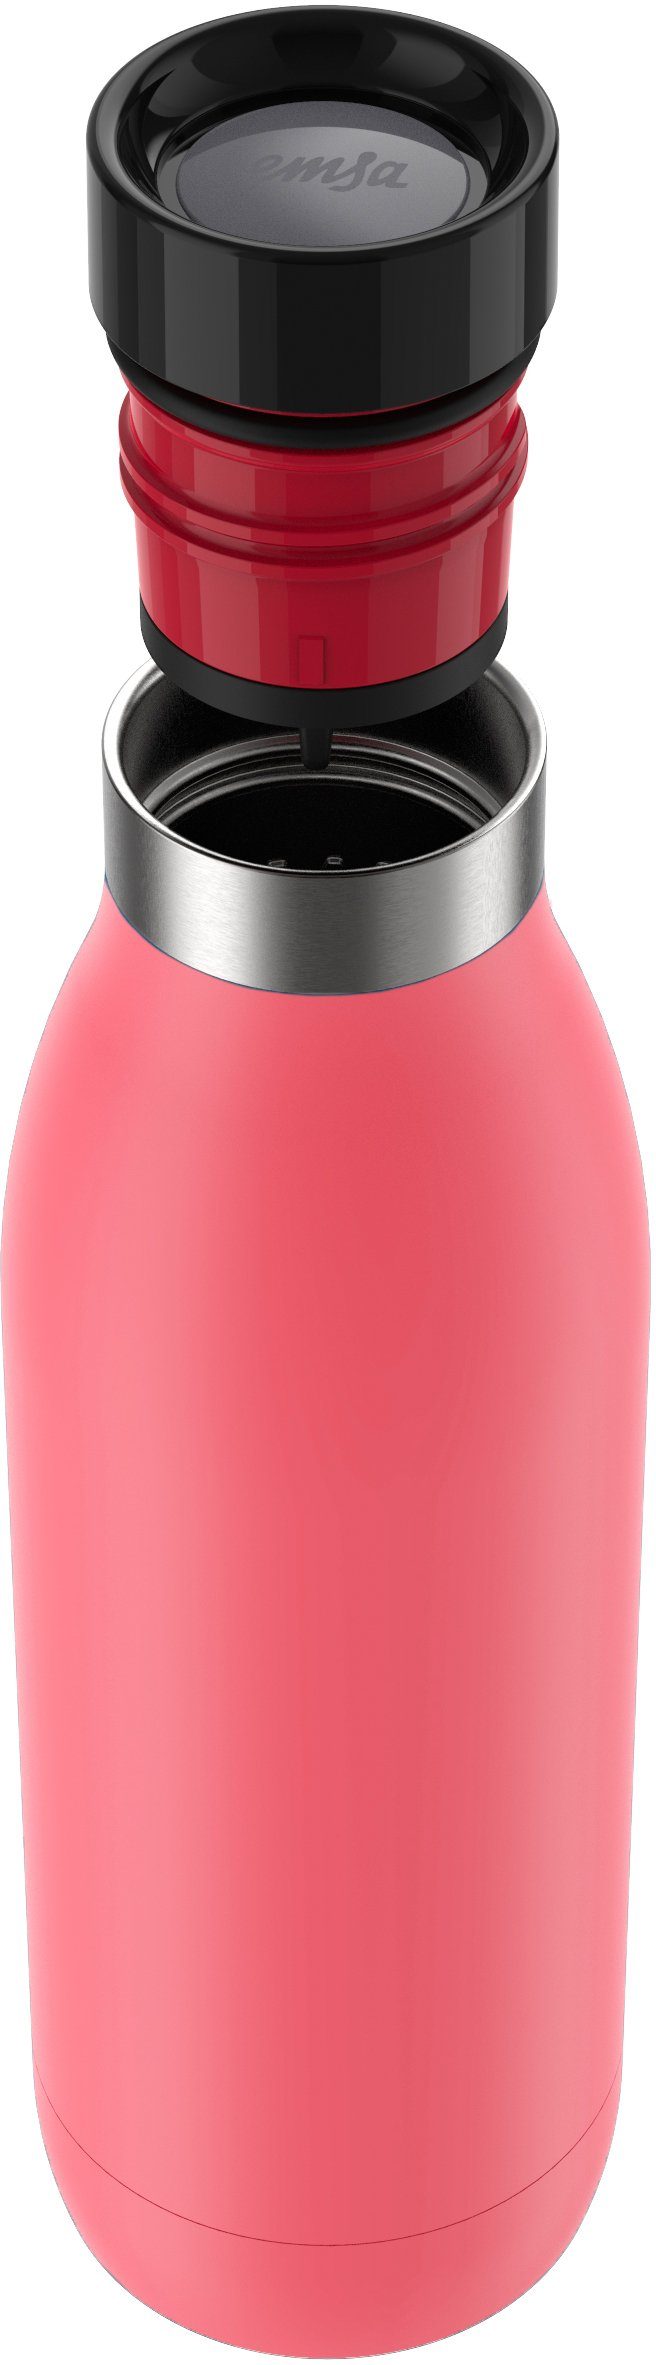 Emsa Trinkflasche Bludrop Color, Deckel, koralle warm/24h Quick-Press Edelstahl, spülmaschinenfest 12h kühl